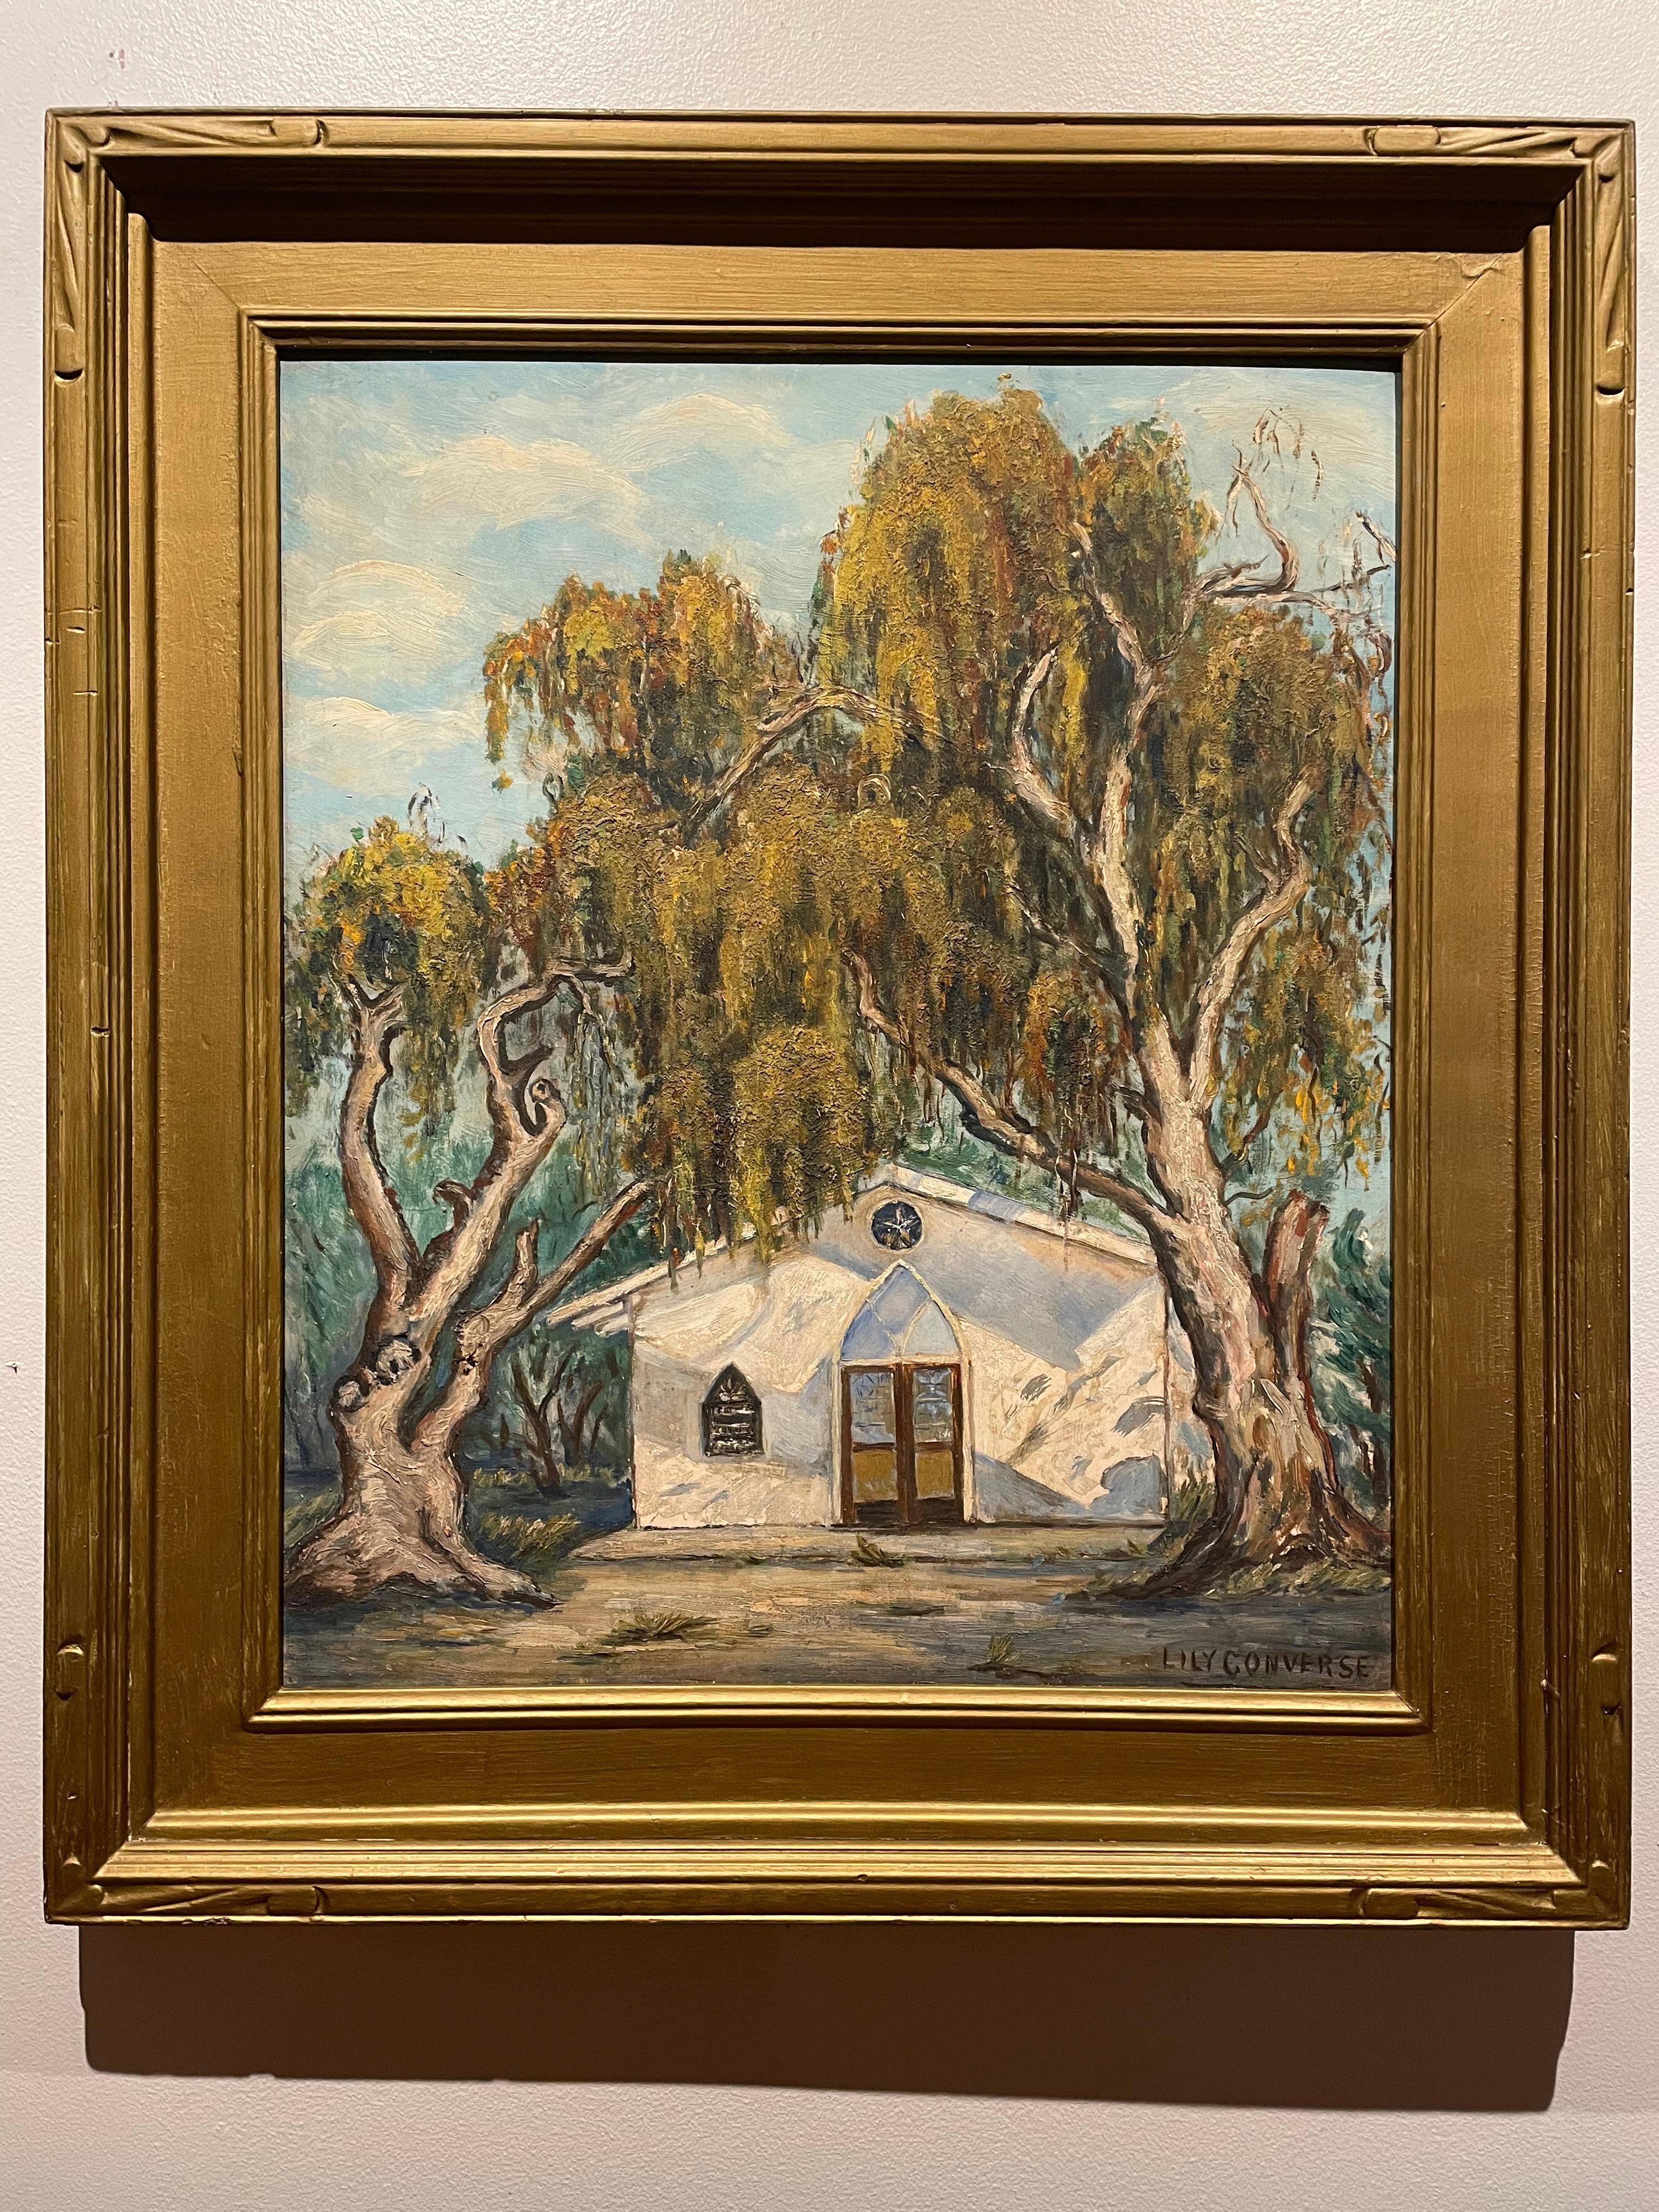 Lily S. Converse Landscape Painting – Impressionistisches Gemälde im Südwesten (Kalifornien?), Lily S., um 1940